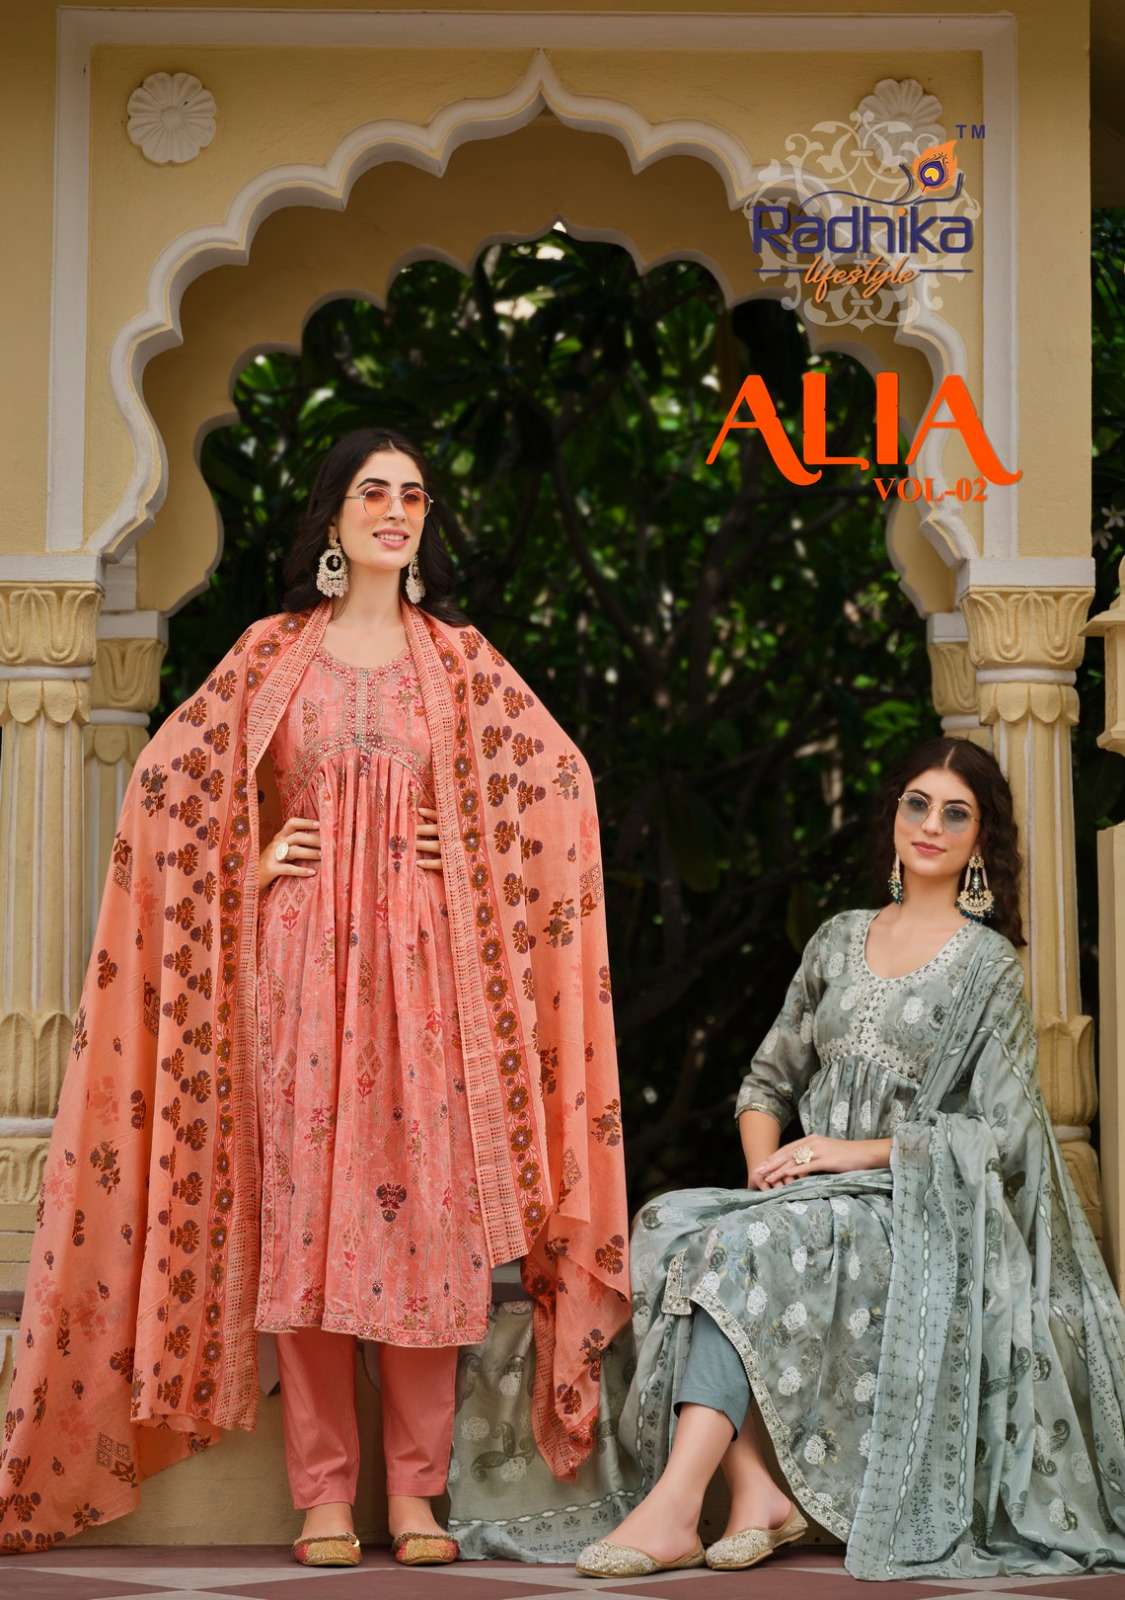 alia vol 2 by radhika lifestyle amazing trendy aliya cut kurti with pant and dupatta